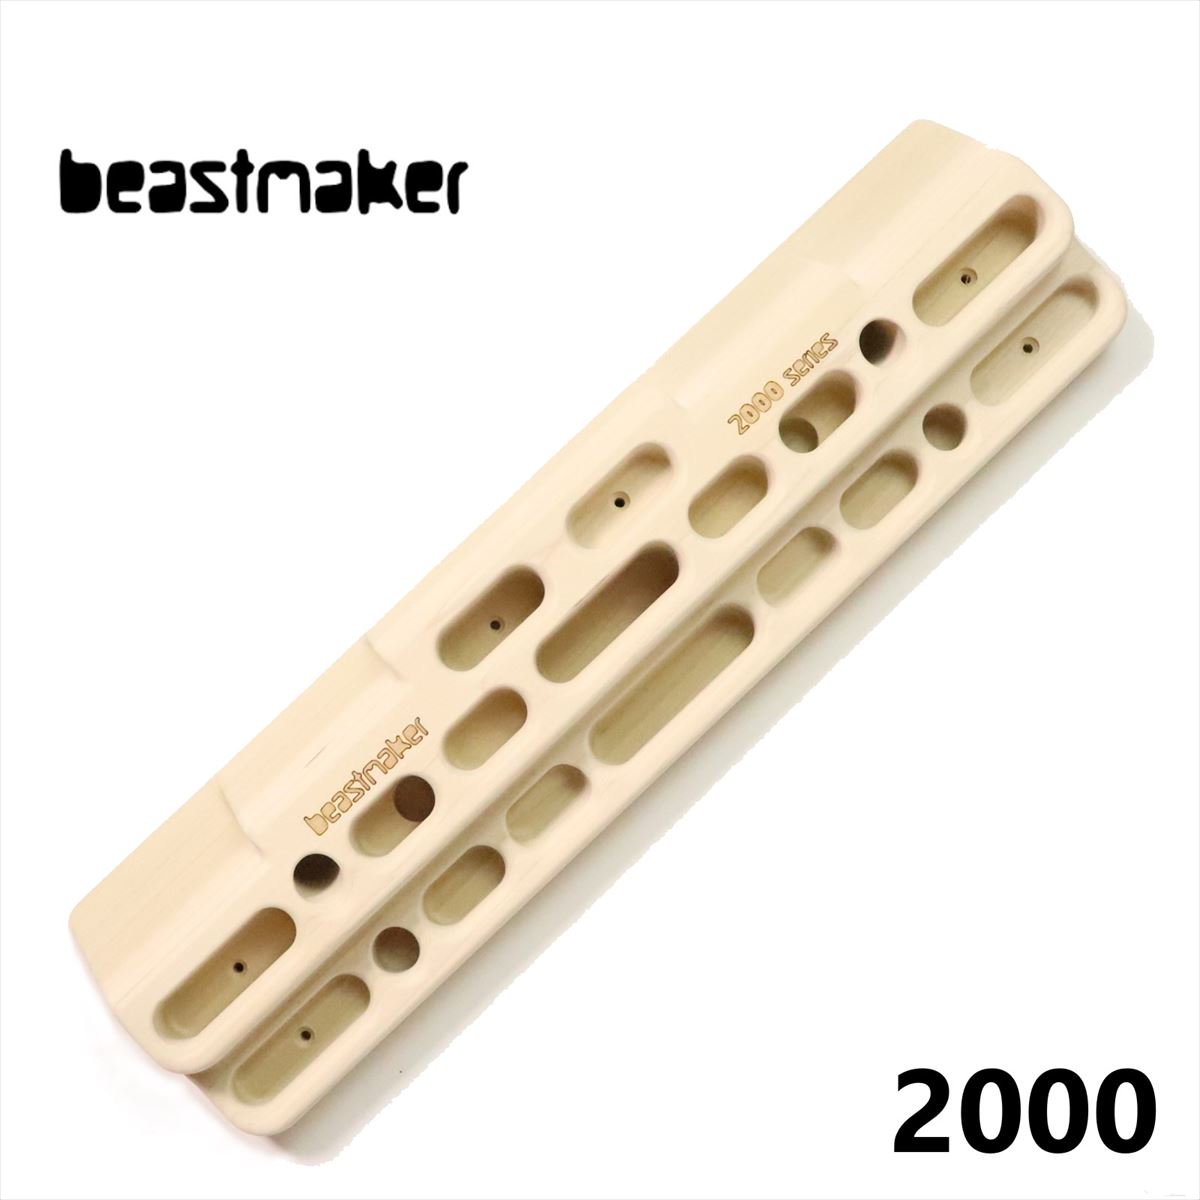 【 Beastmaker ビーストメーカー 2000 Series Fingerboard 】 トレーニング フィンガーボード/ホールド トレーニング器具 フィンガーボード ホールド クライミングギア クライミング用品 ボルダリング クライミング 登山 登山用品